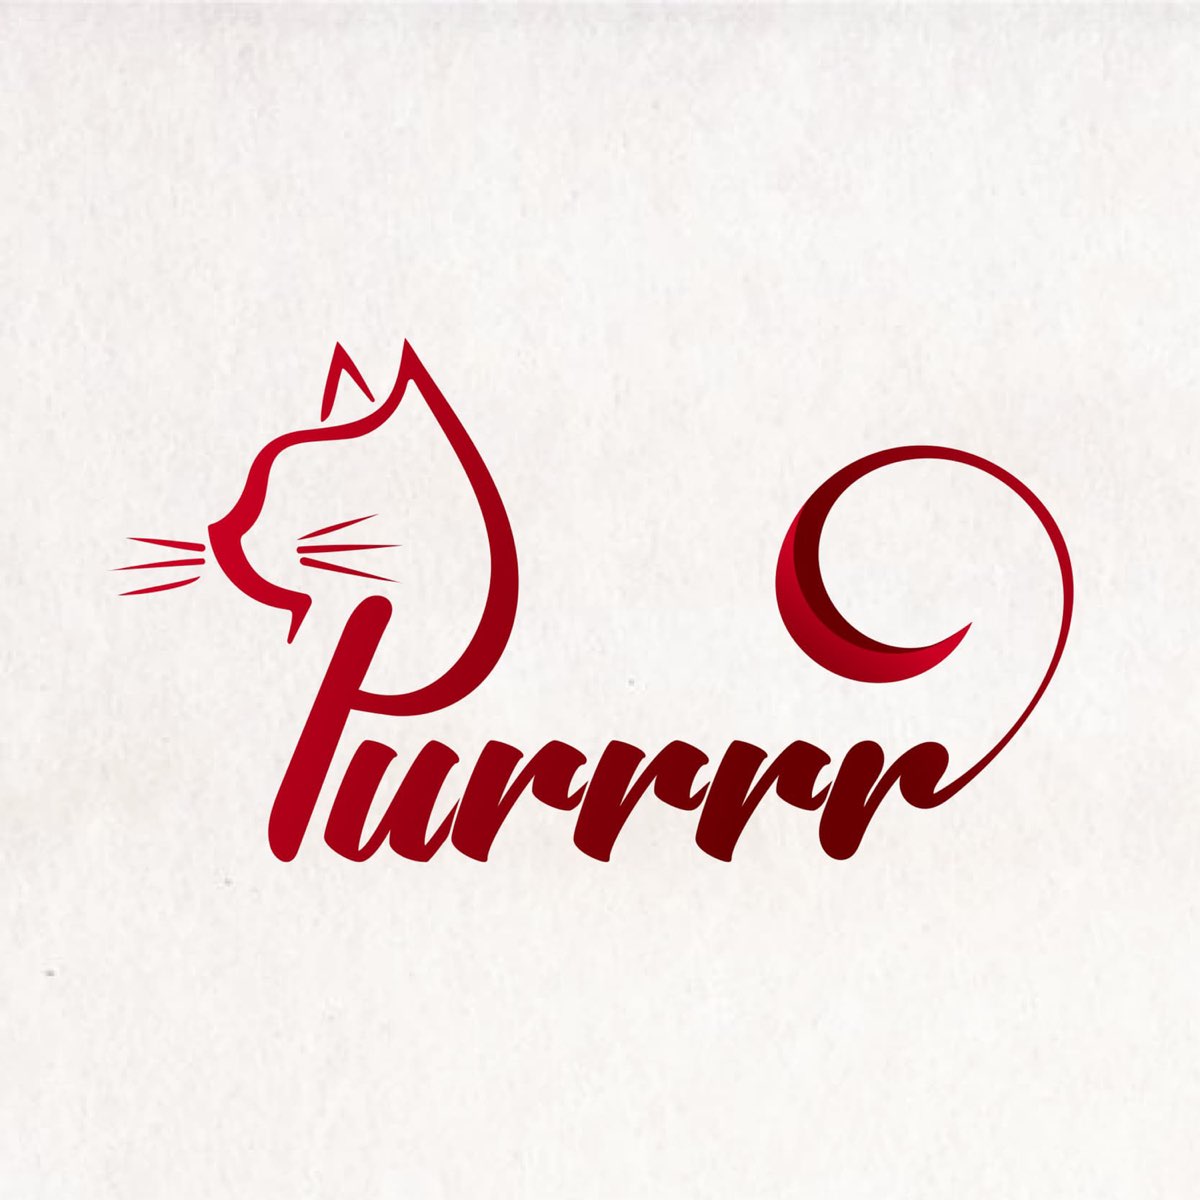 Магазин кошечек. Логотипы с котами. Логотип кошечка. Кошки логотипы эмблемы. Магазин кошка логотип.